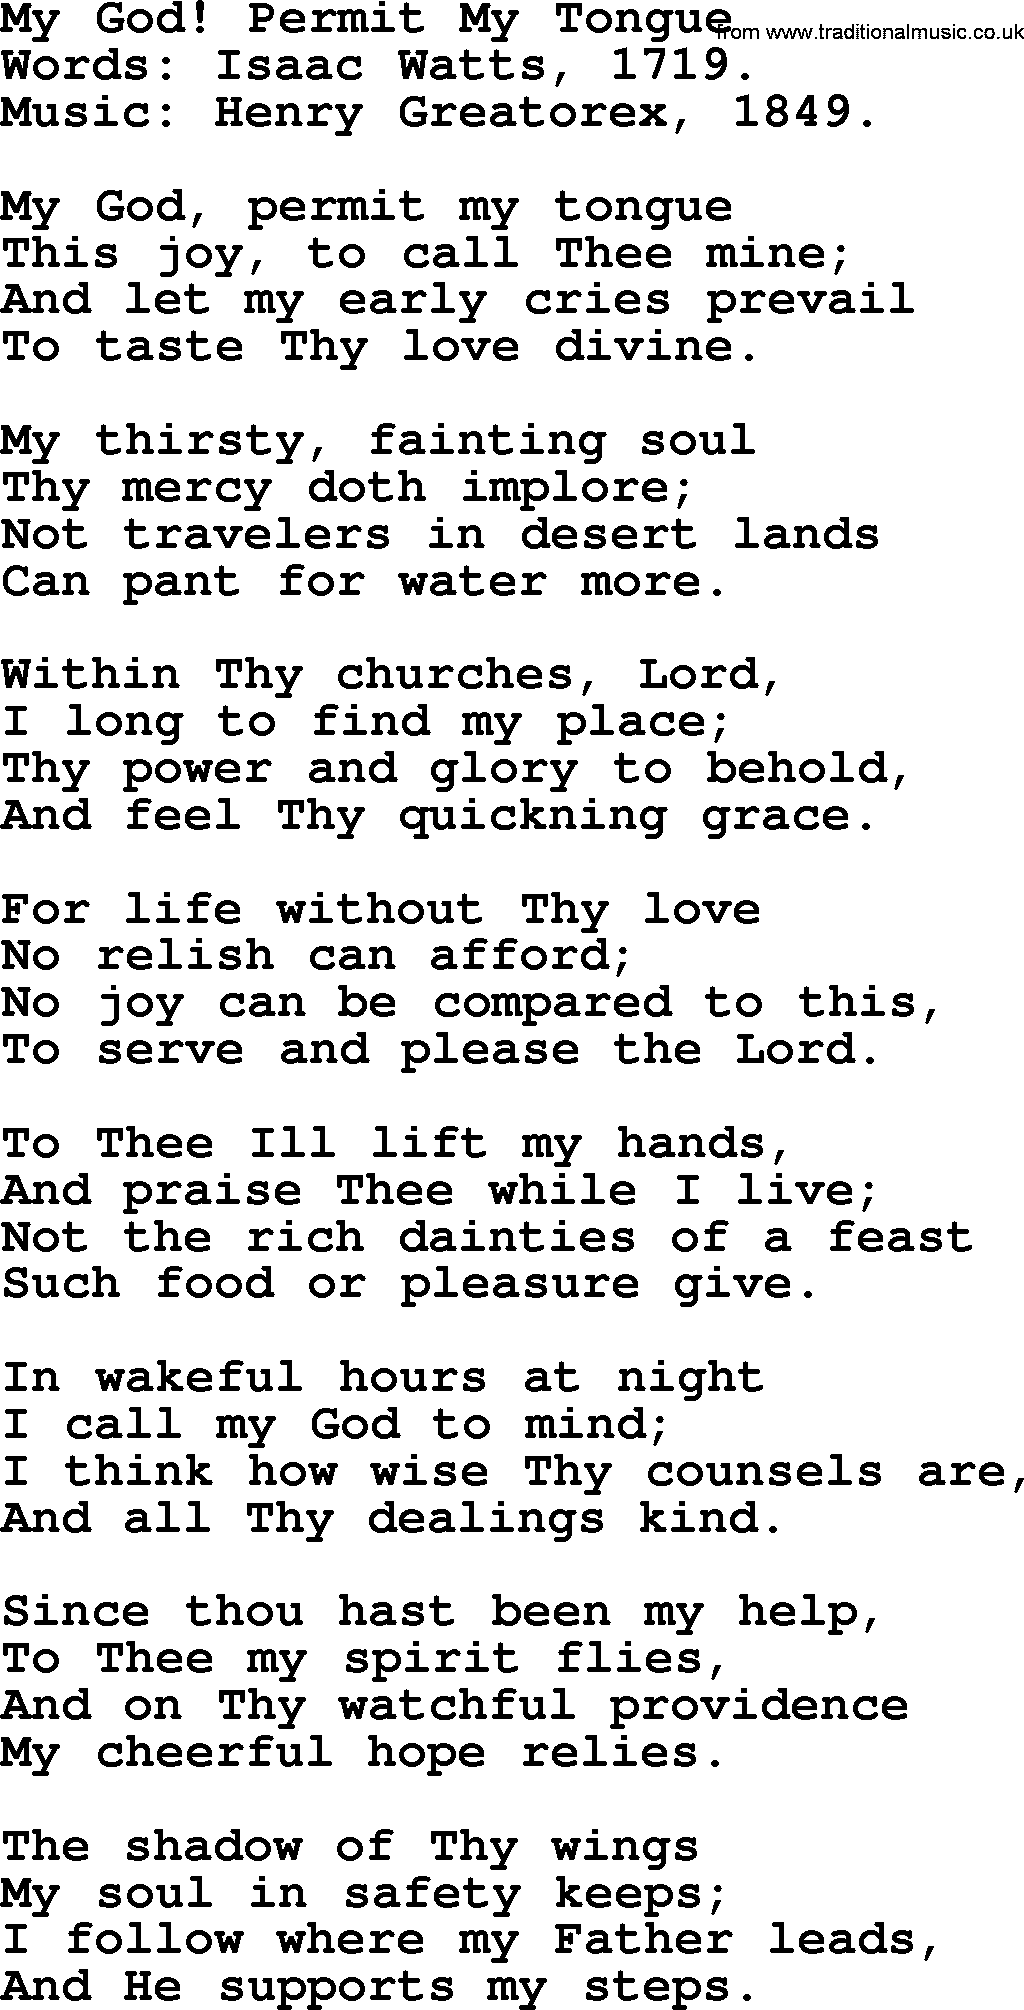 Isaac Watts Christian hymn: My God! Permit My Tongue- lyricss